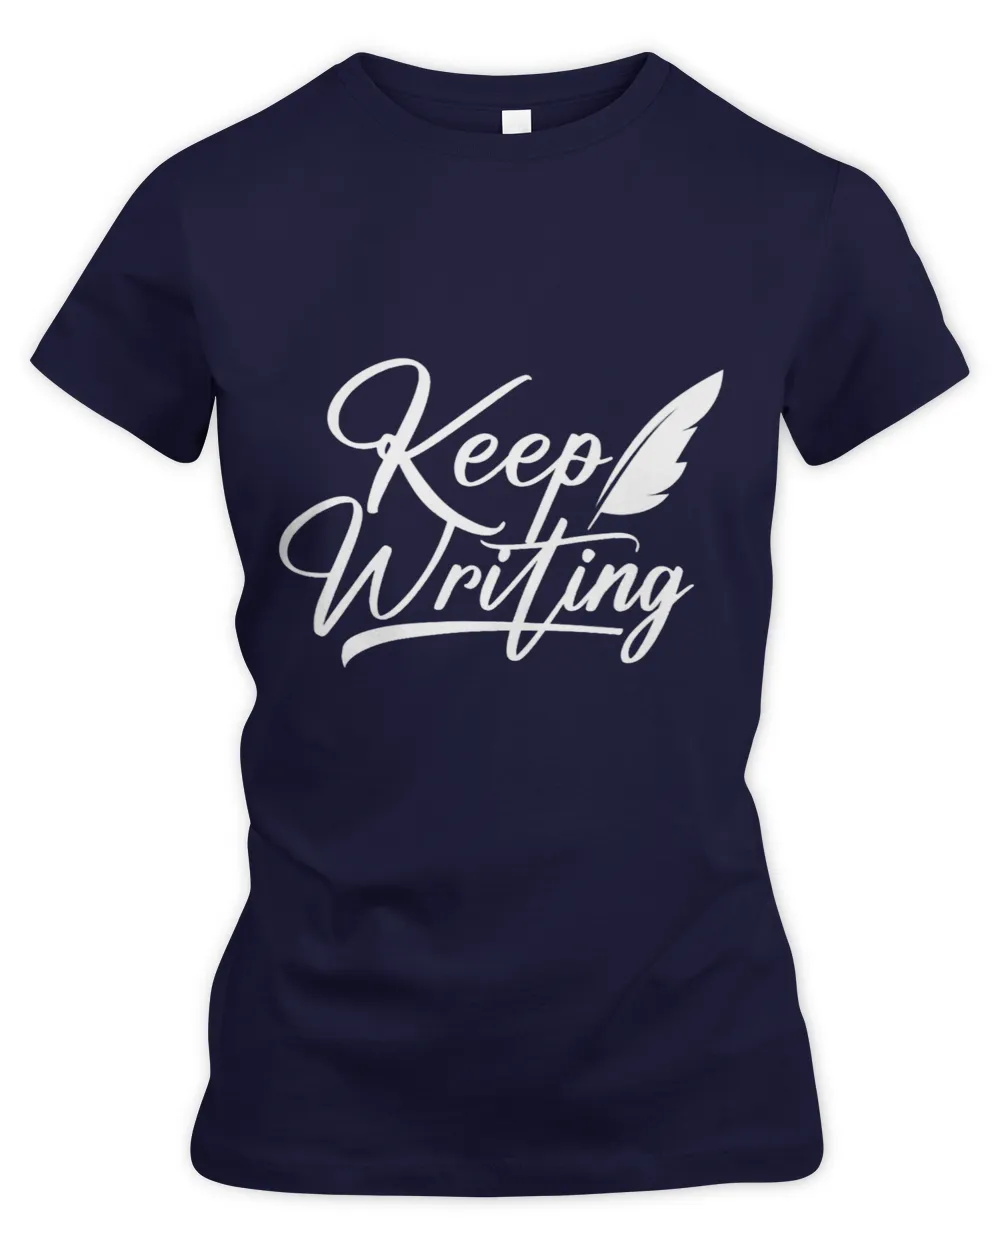 Keep Writing Author Writer Novelist Journalist